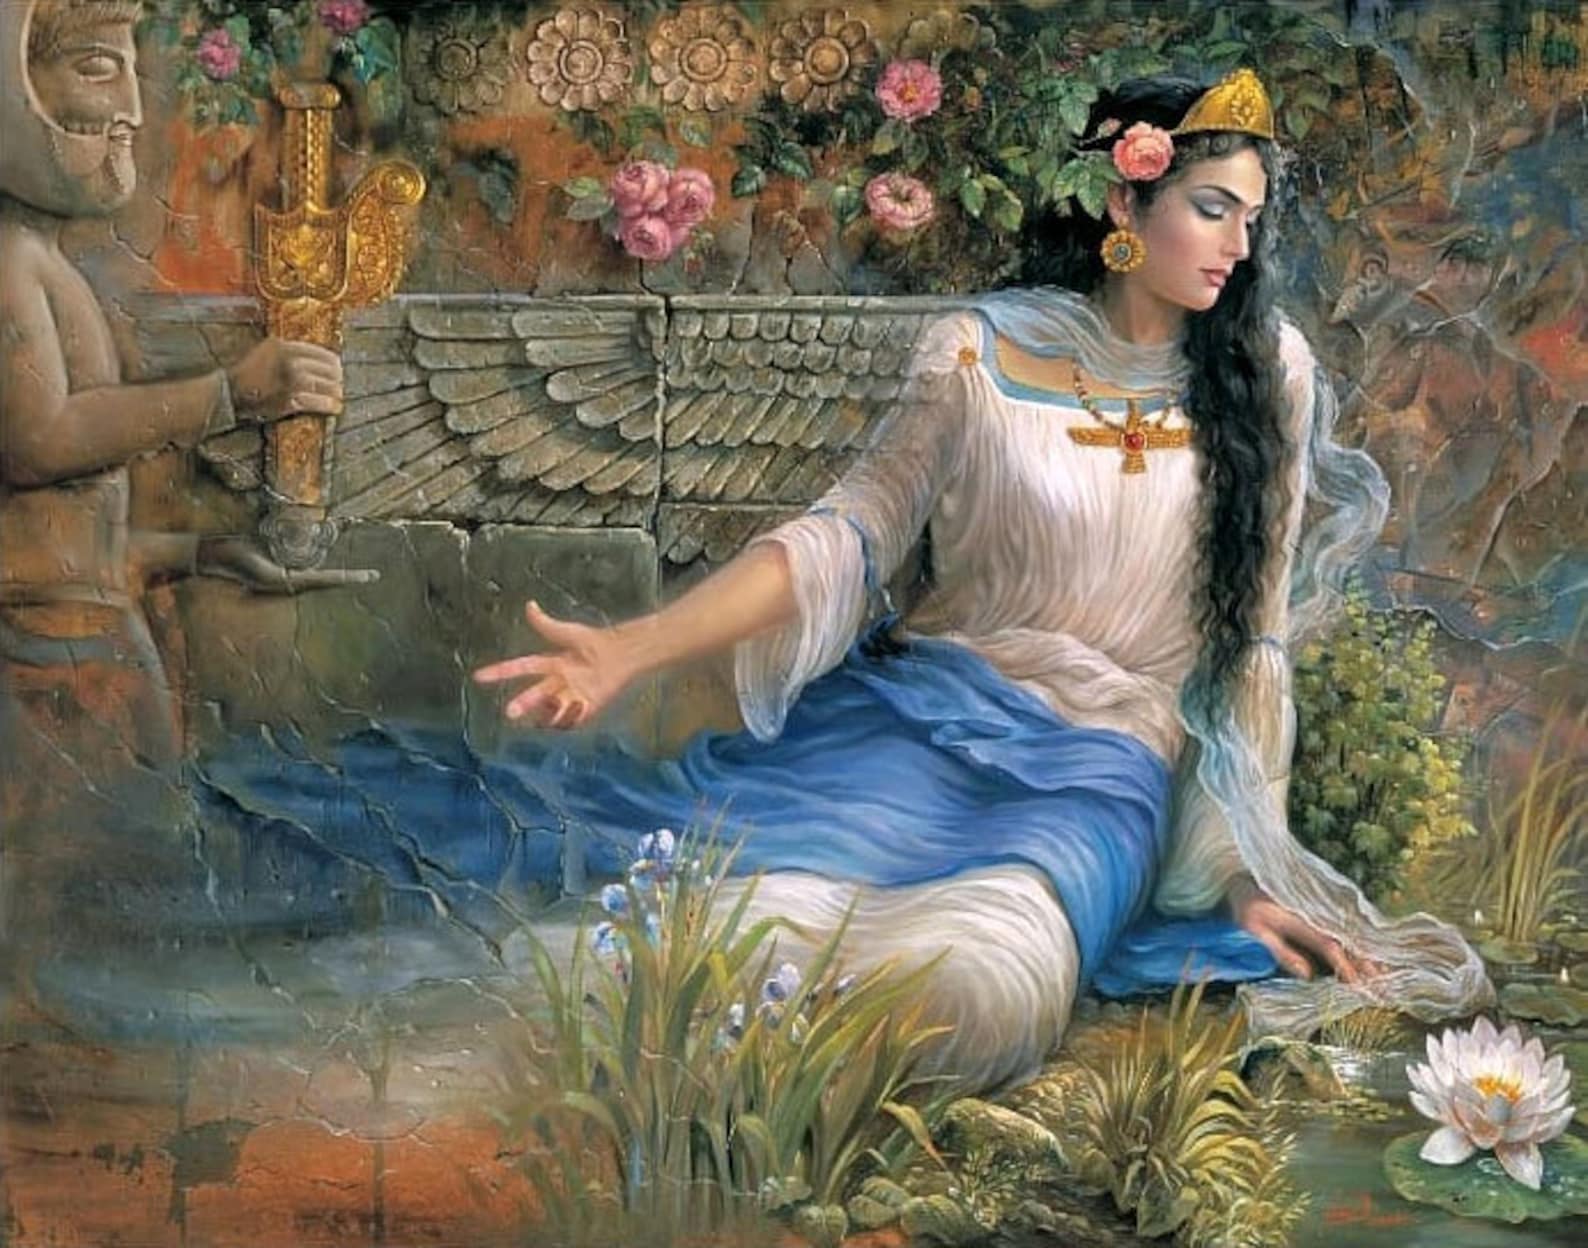 Antique Persian Classical Art Persian Princess Painting Etsy